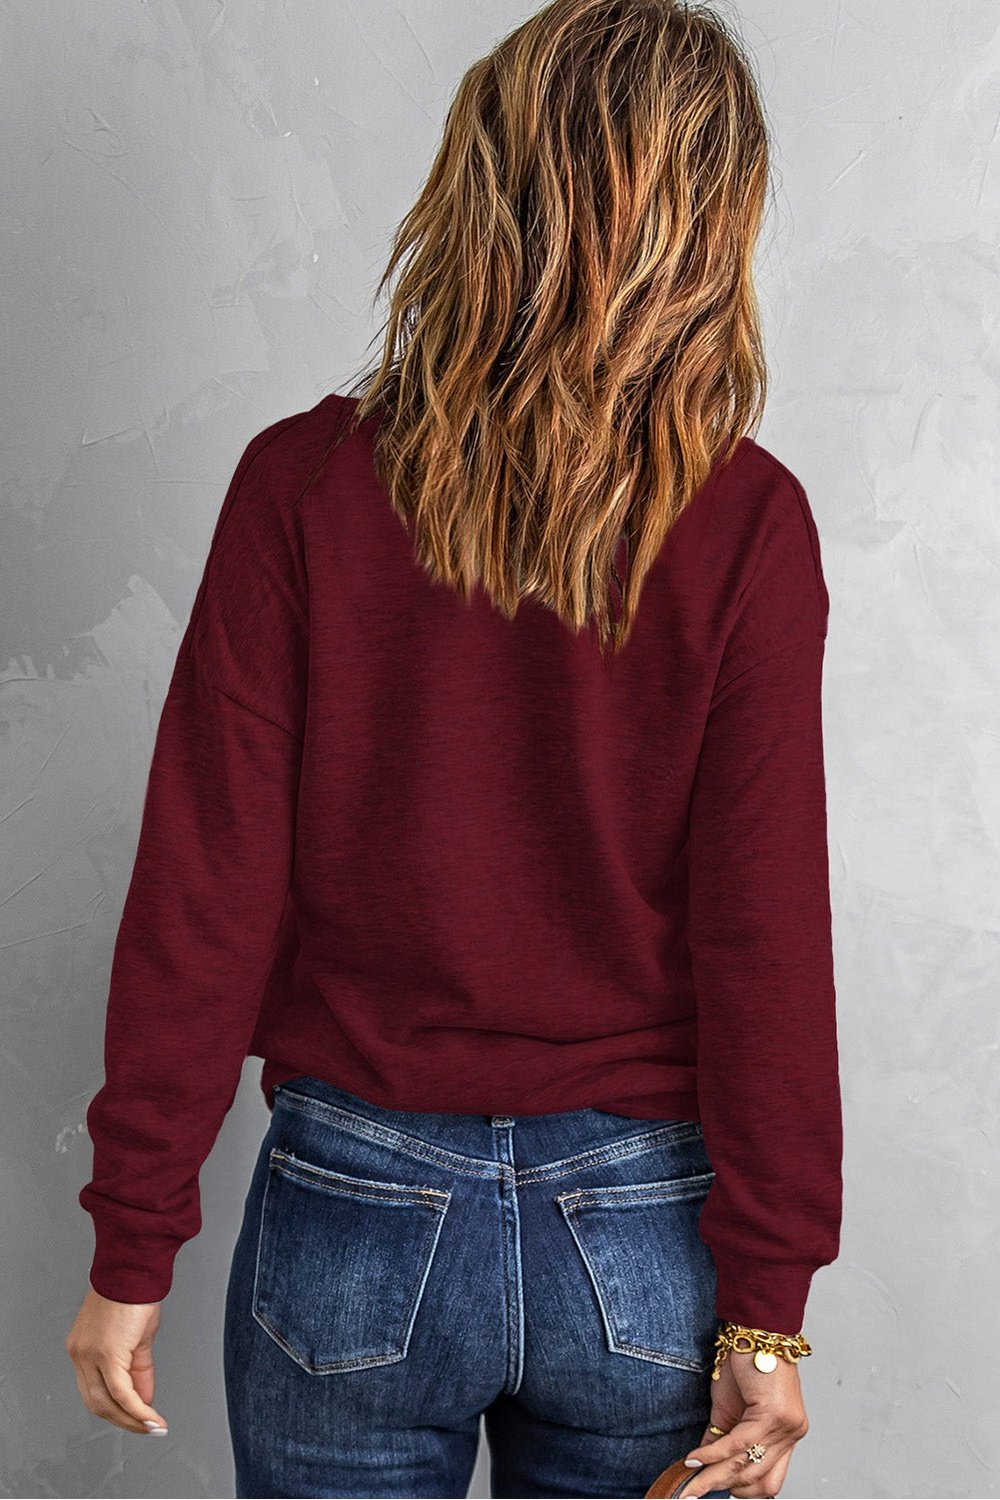 Quilted Half-Zip Sweatshirt with Pocket - Sweatshirts & Hoodies - FITGGINS